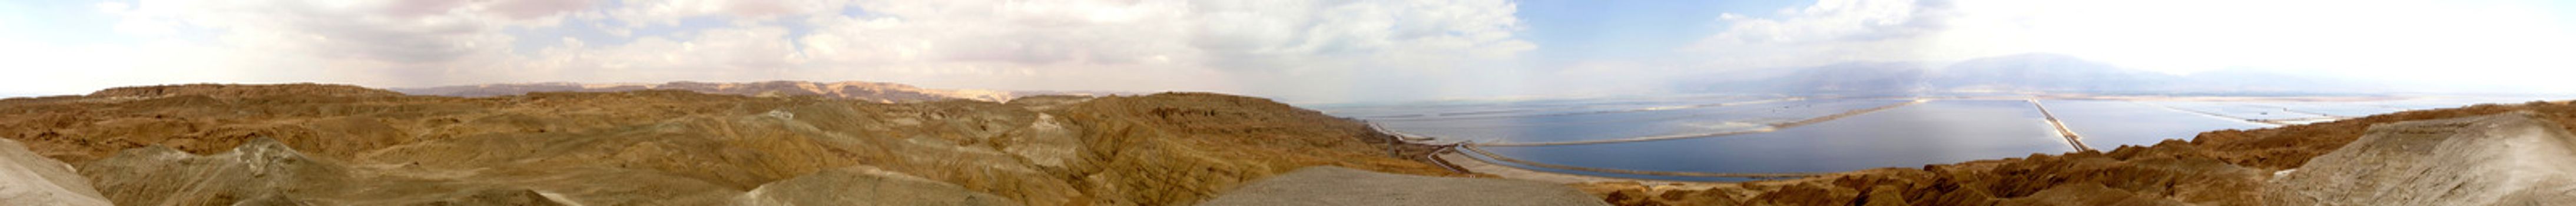 dead sea and arava desert panorama - israel